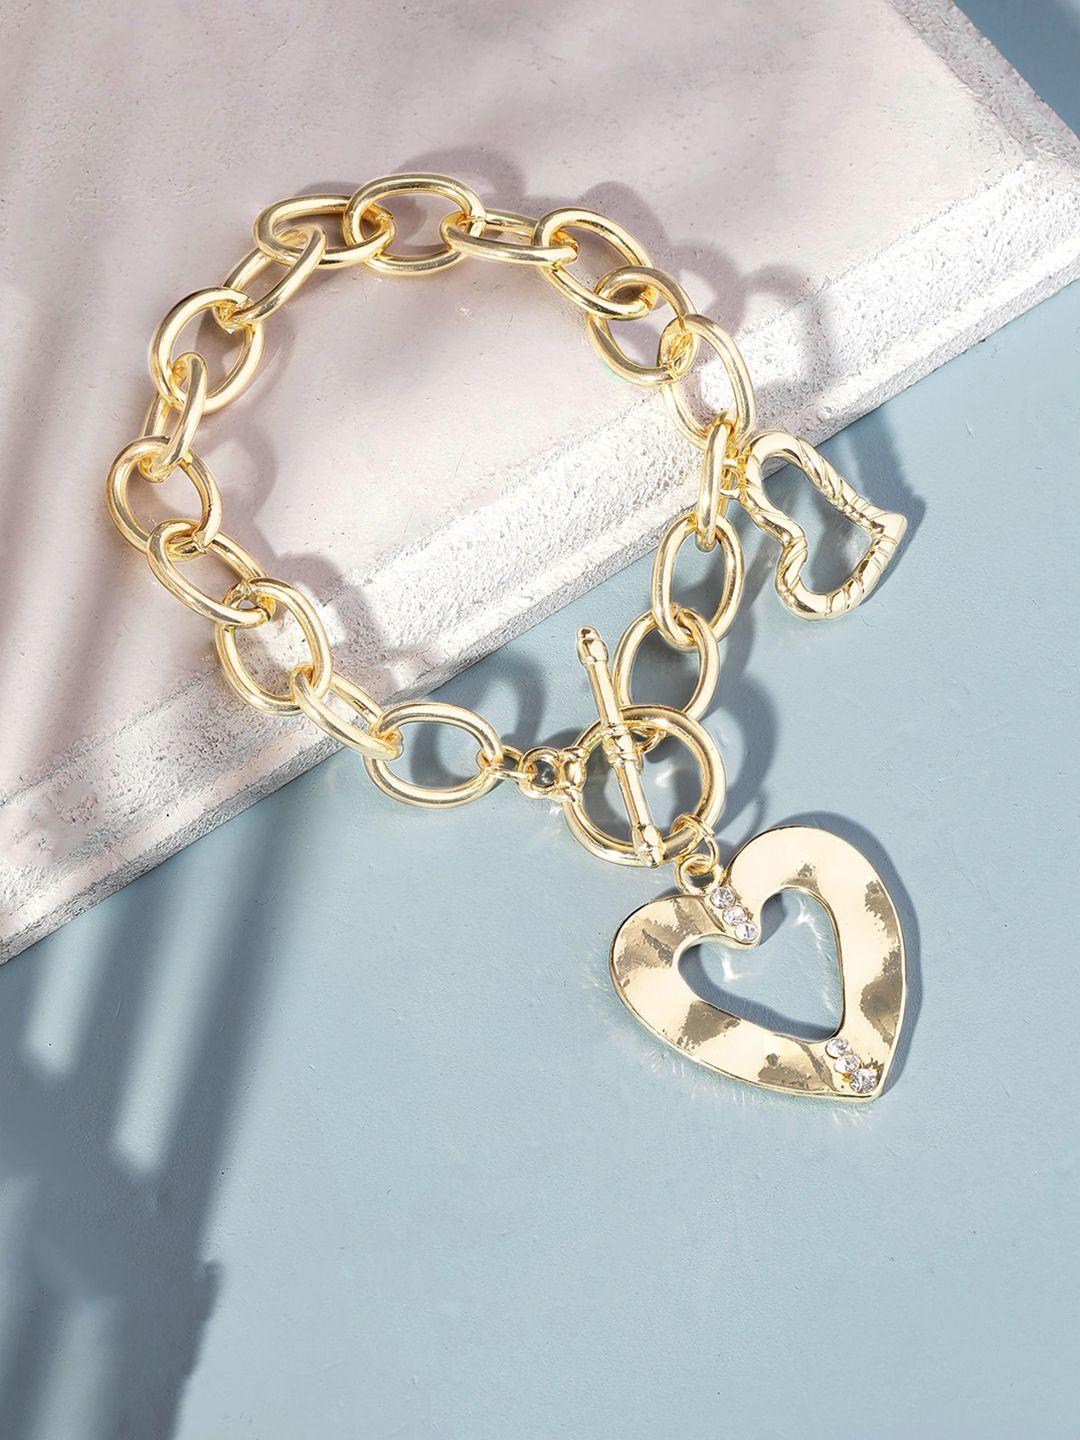 rubans voguish women gold-toned & white gold-plated charm bracelet